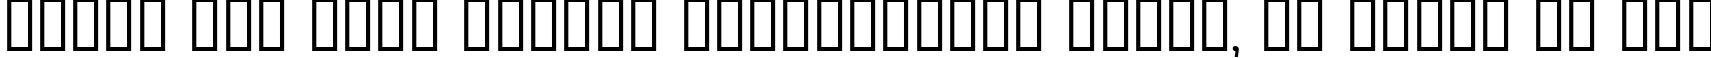 Пример написания шрифтом Aquaduct Reverse Italic текста на русском